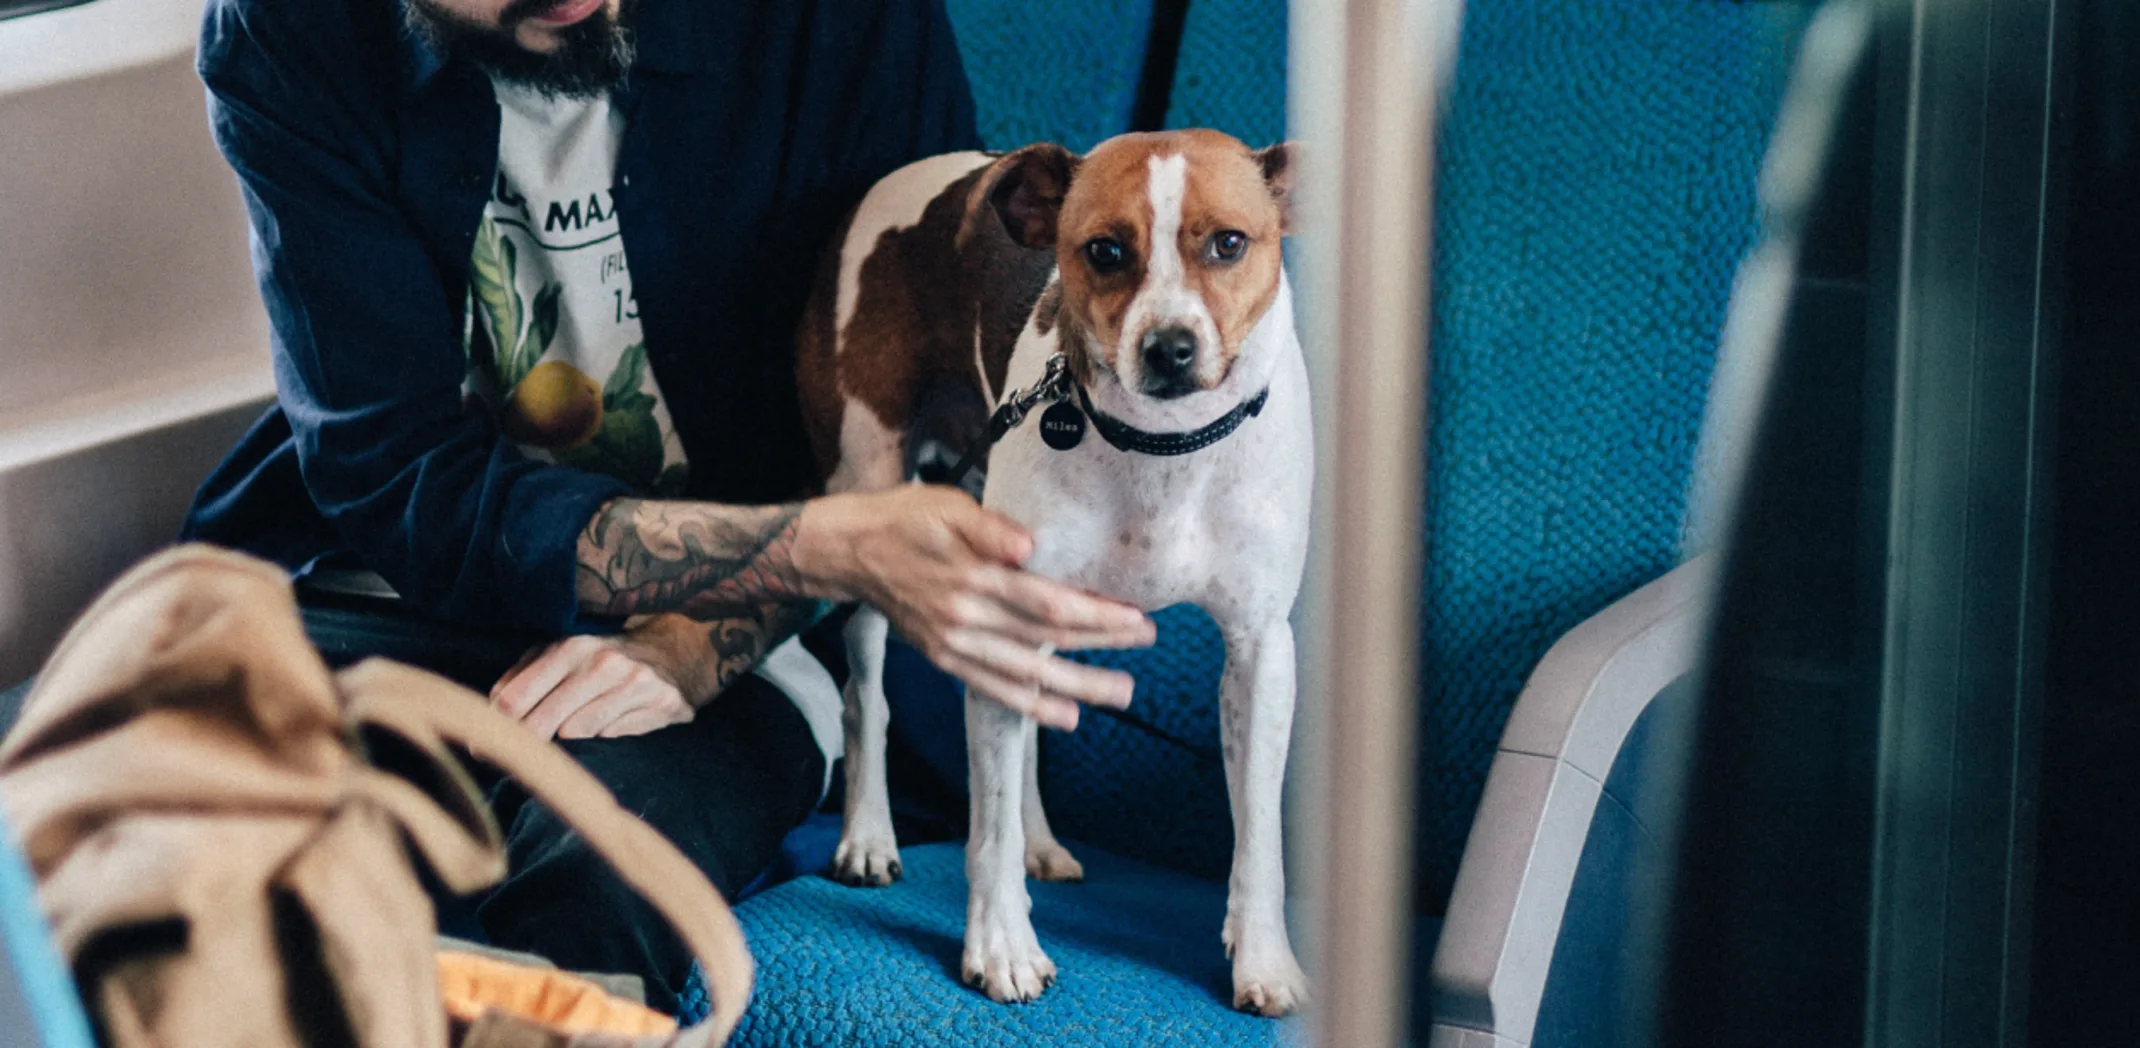 Dog on train 